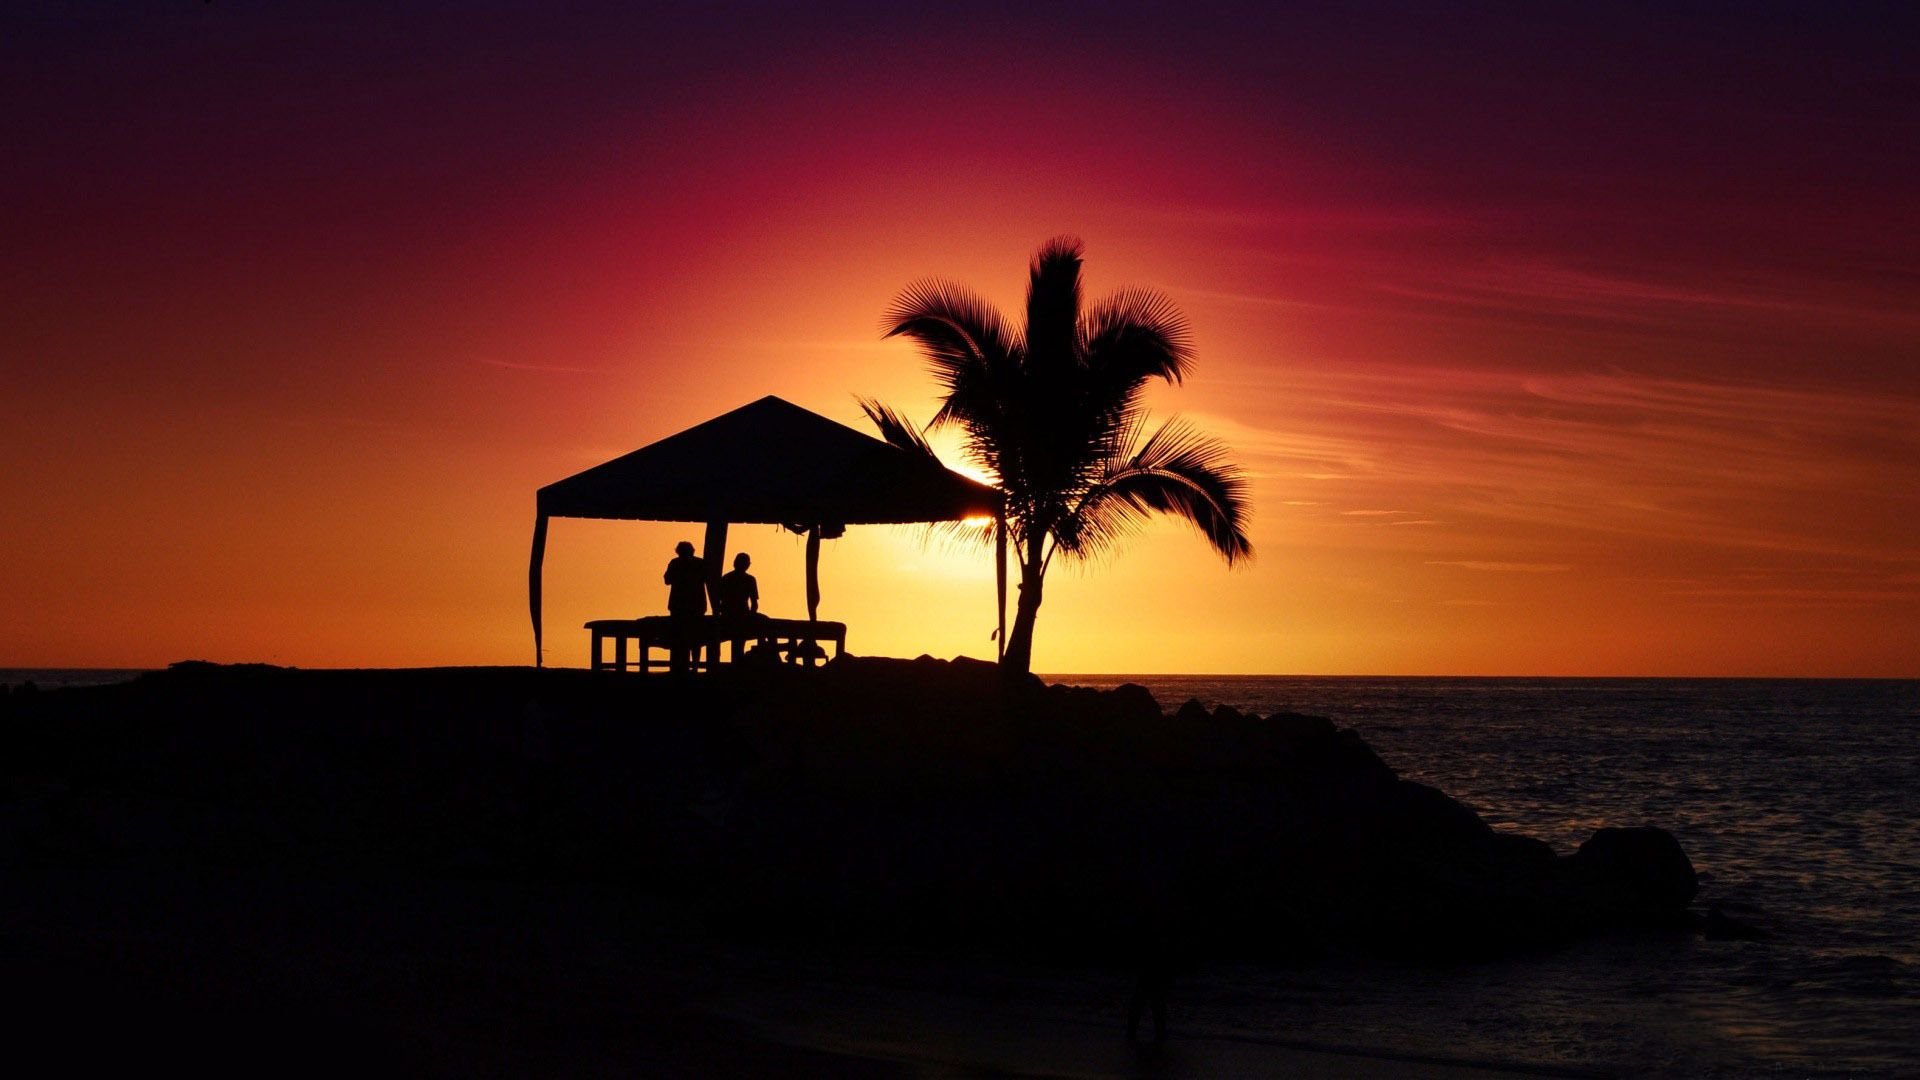 Beach Sunset Silhouette Wallpaper | Silhouettes' | Pinterest ...